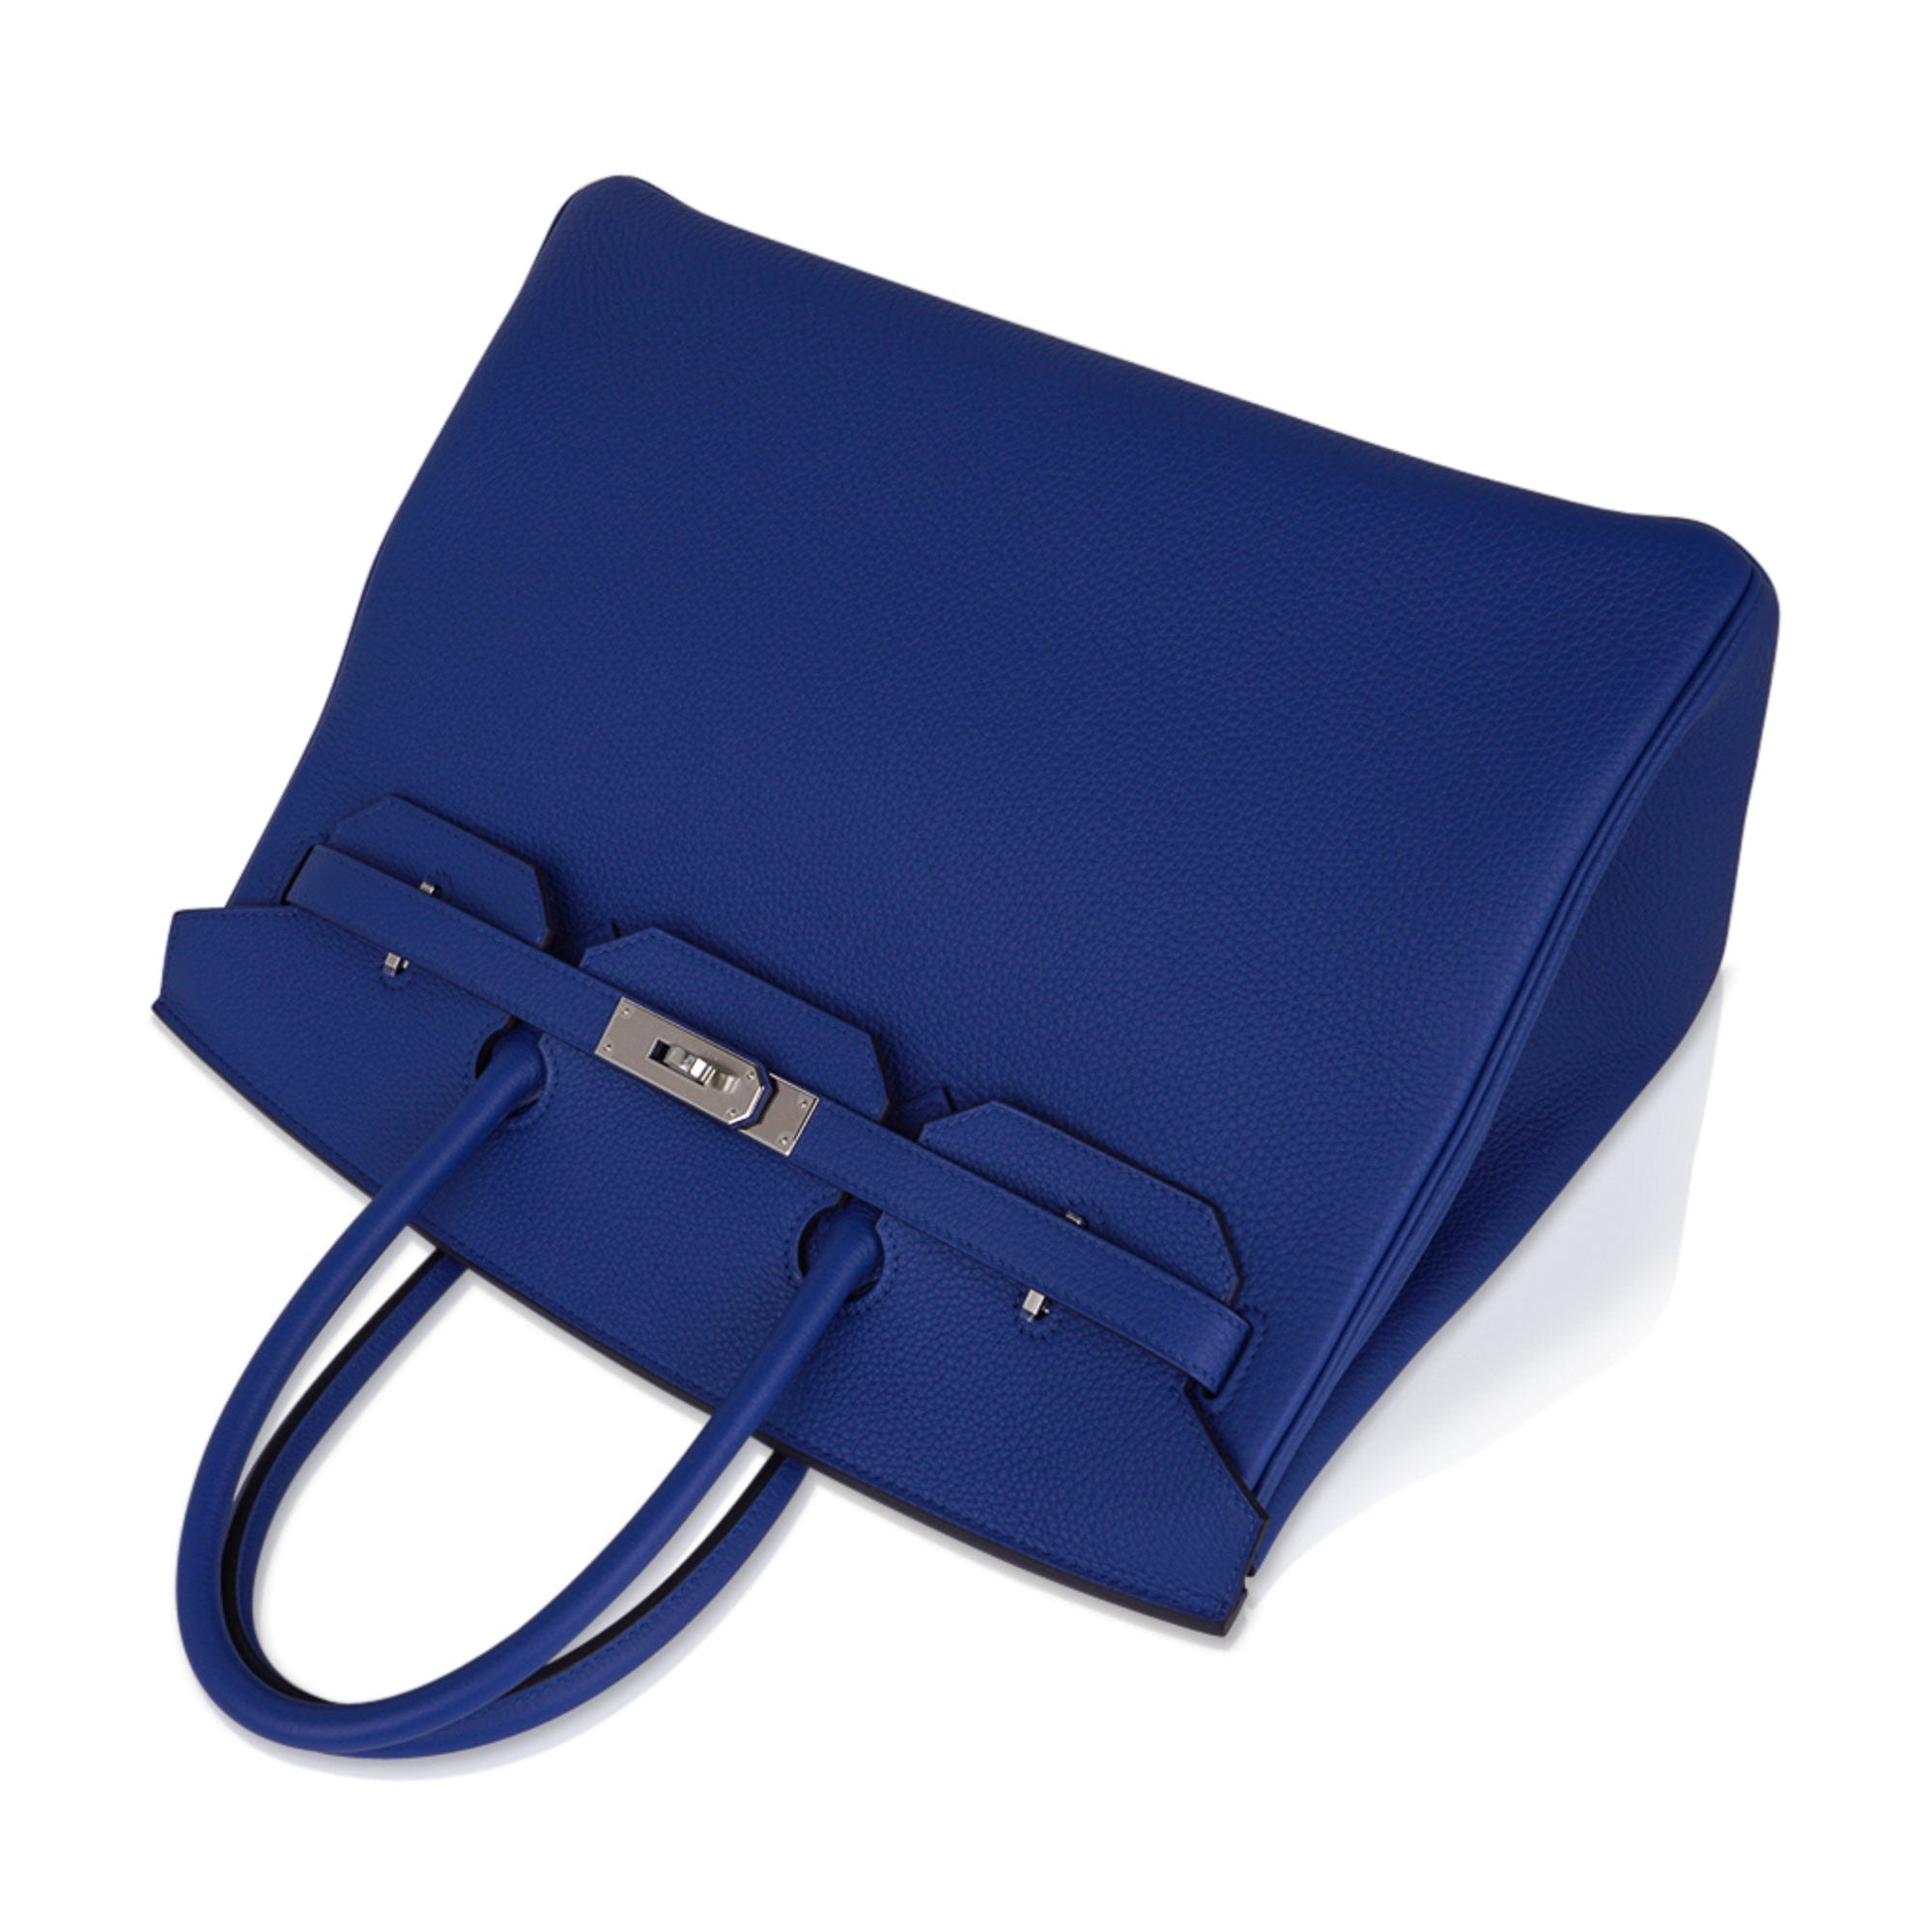 hermes purse blue